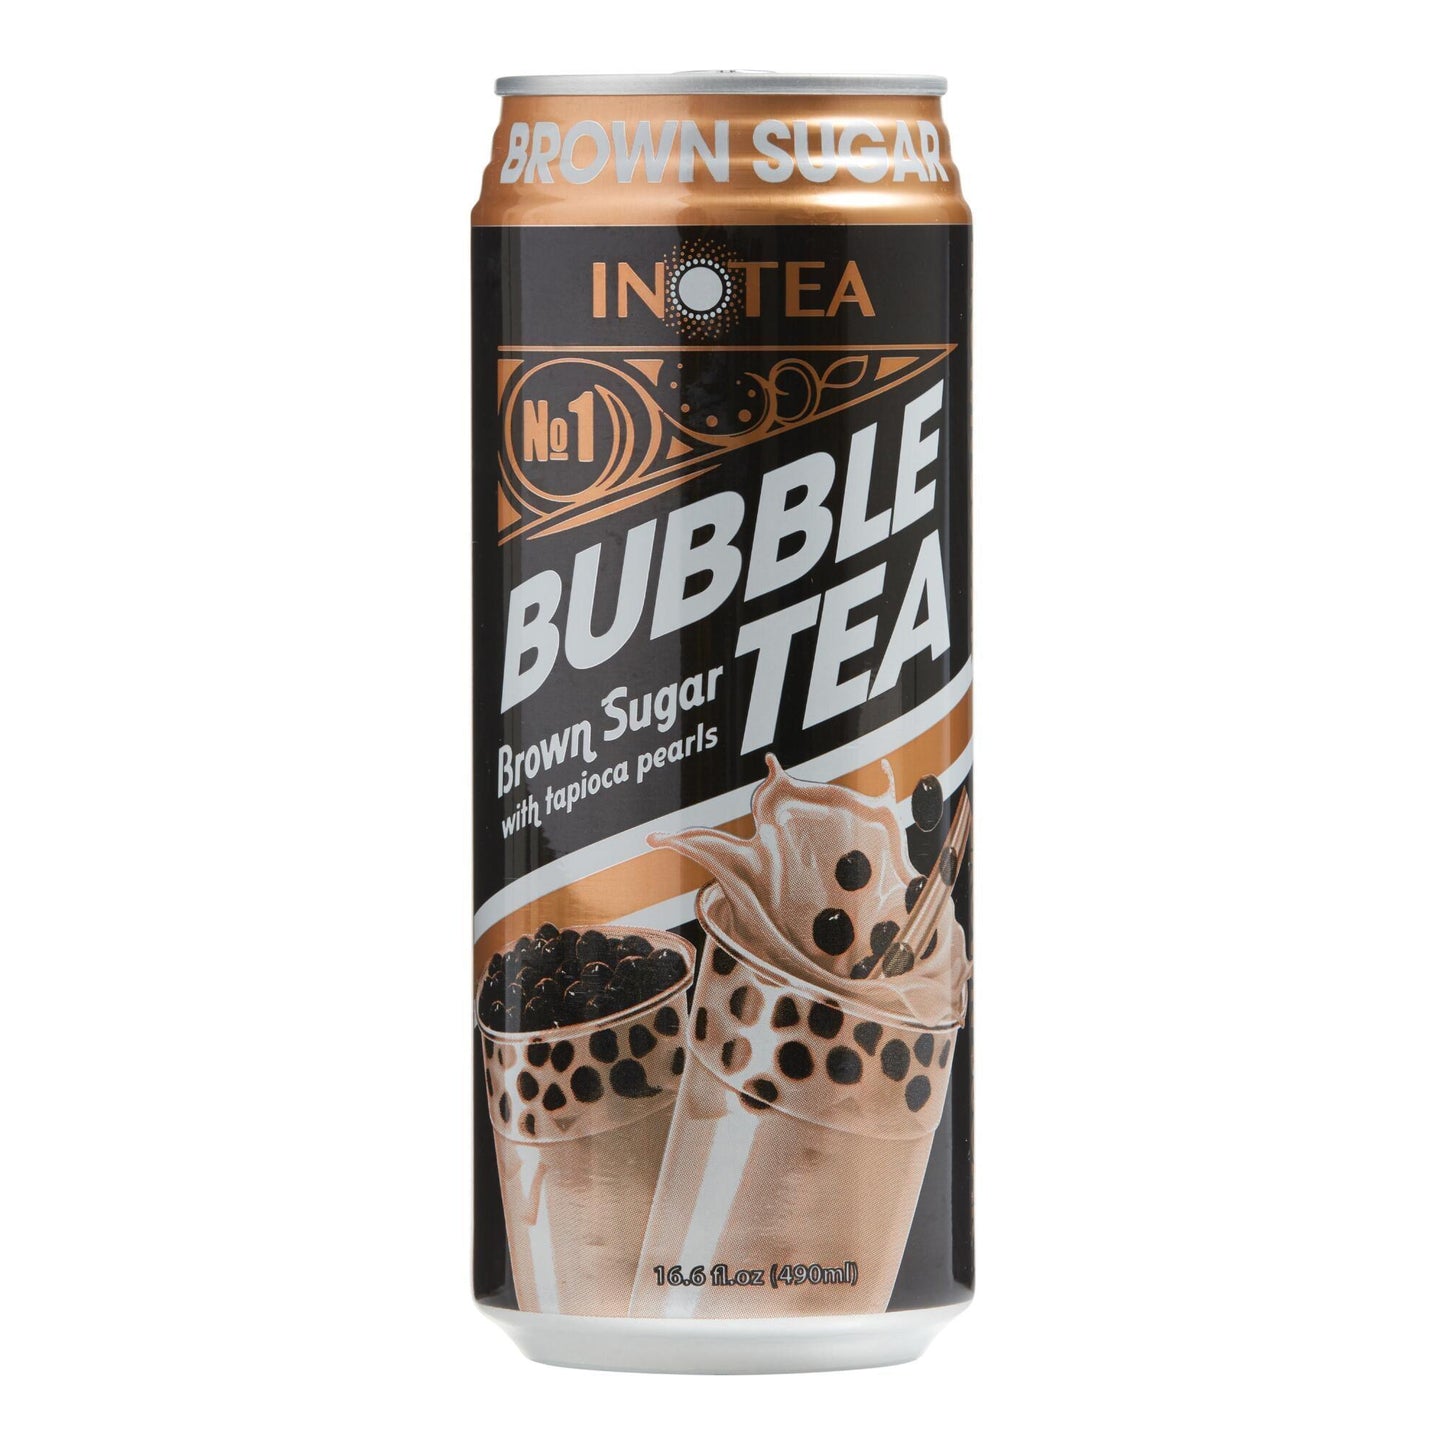 Inotea Brown Sugar Bubble Tea - Extreme Snacks